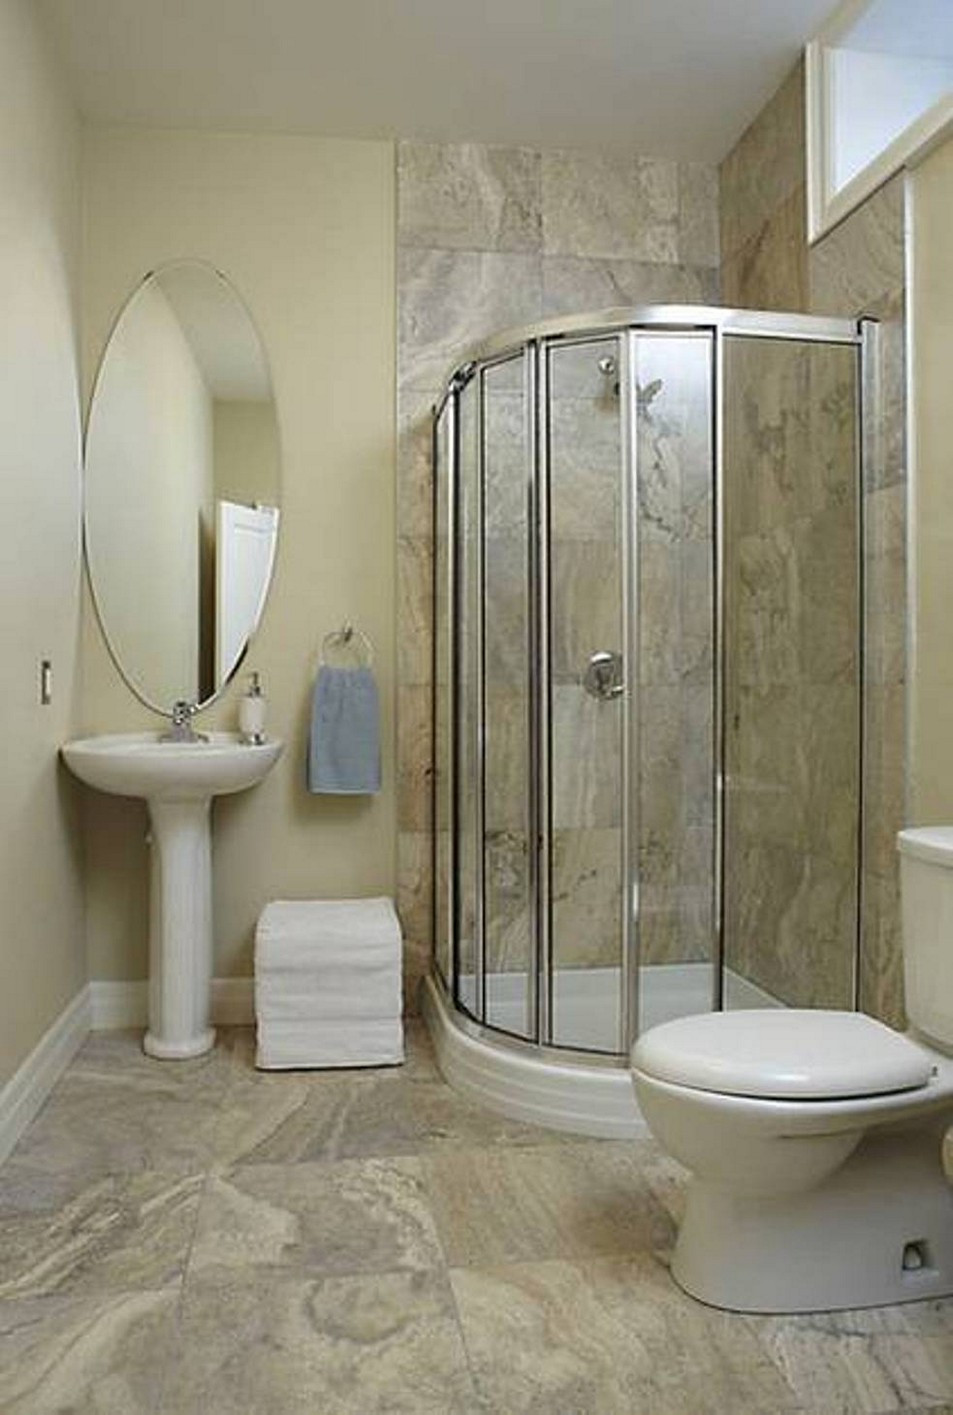 Basement Bathroom Design
 6 Basement Bathroom Ideas for Small Space Houseminds